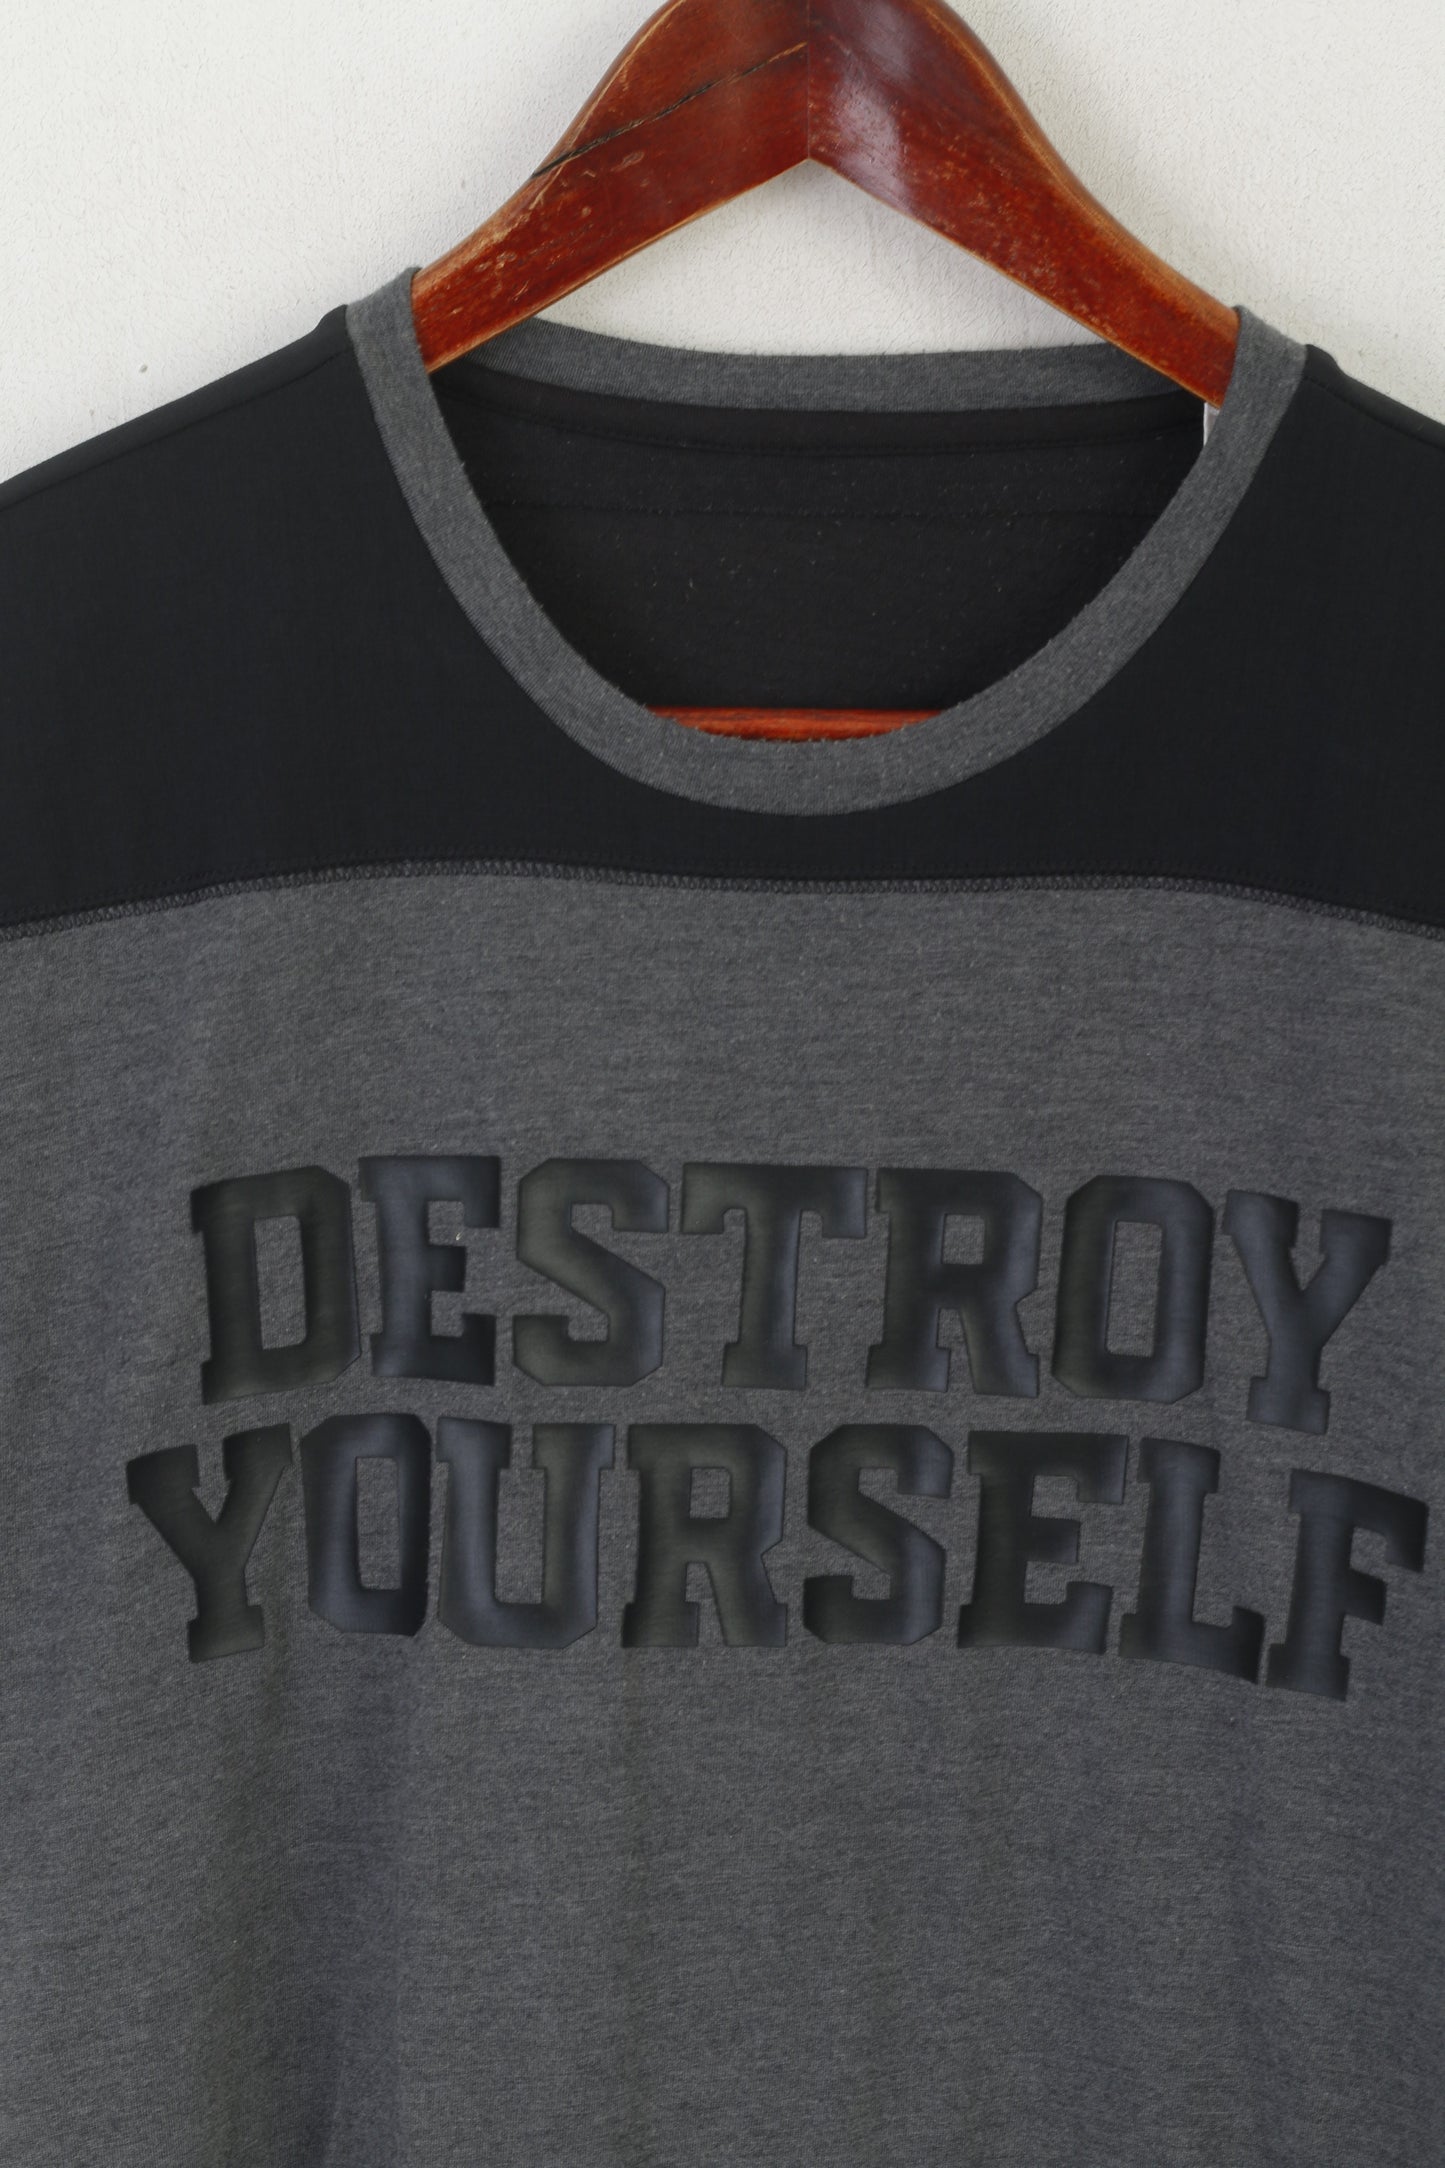 Maglietta Adidas da uomo grigia Destroy Yourself Climacool Sportswear Run Active Top